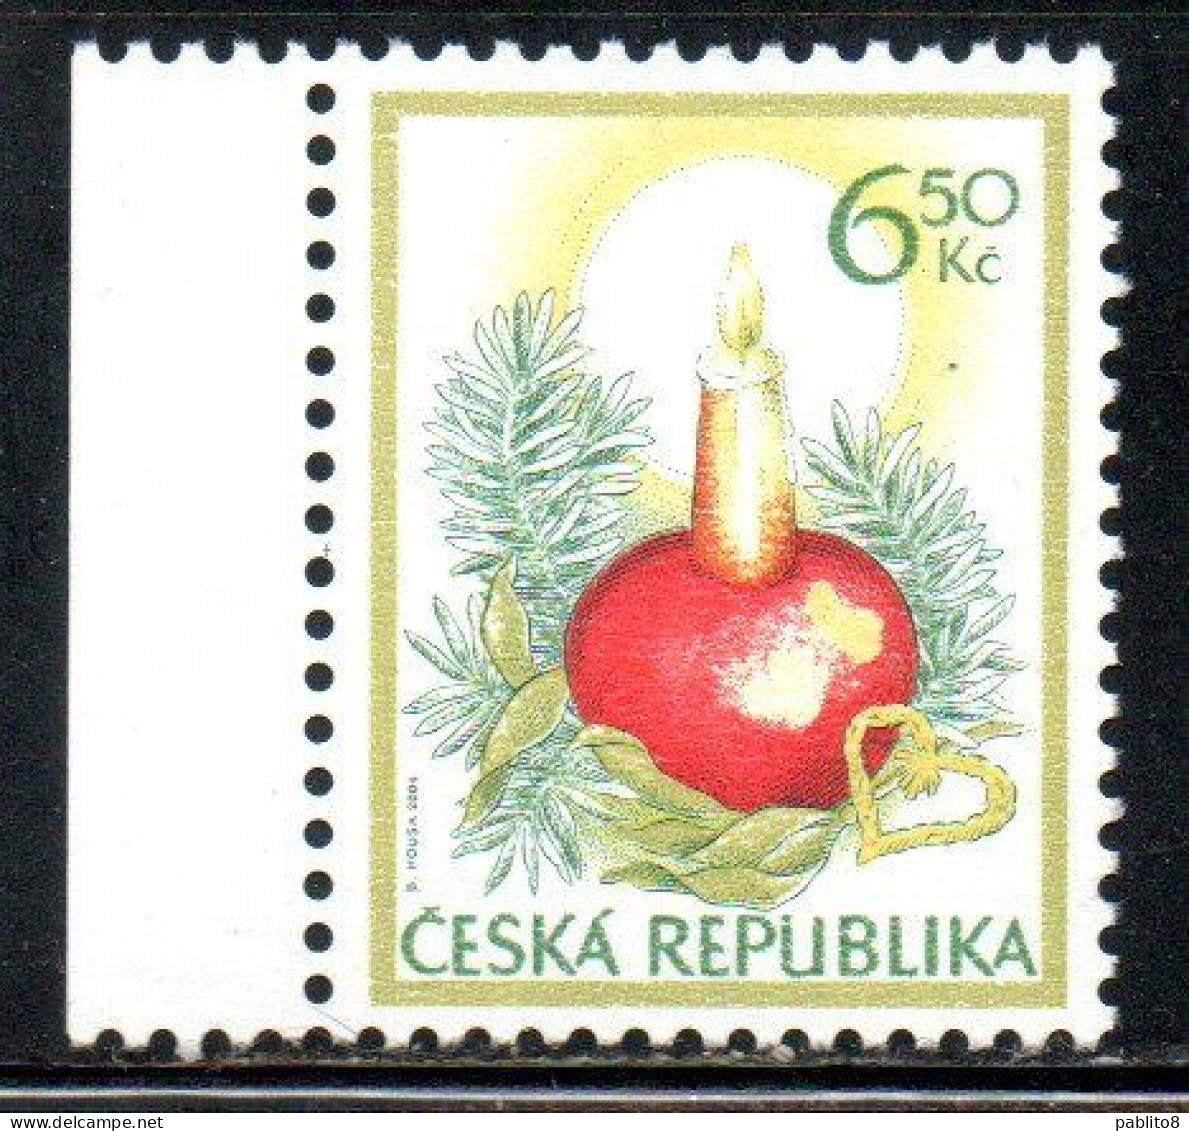 CZECH REPUBLIC CECA REPUBBLICA CZECHOSLOVAKIA 2004 CHRISTMAS NATALE NOEL WEIHNACHTEN NAVIDAD 6.50k MNH - Ungebraucht